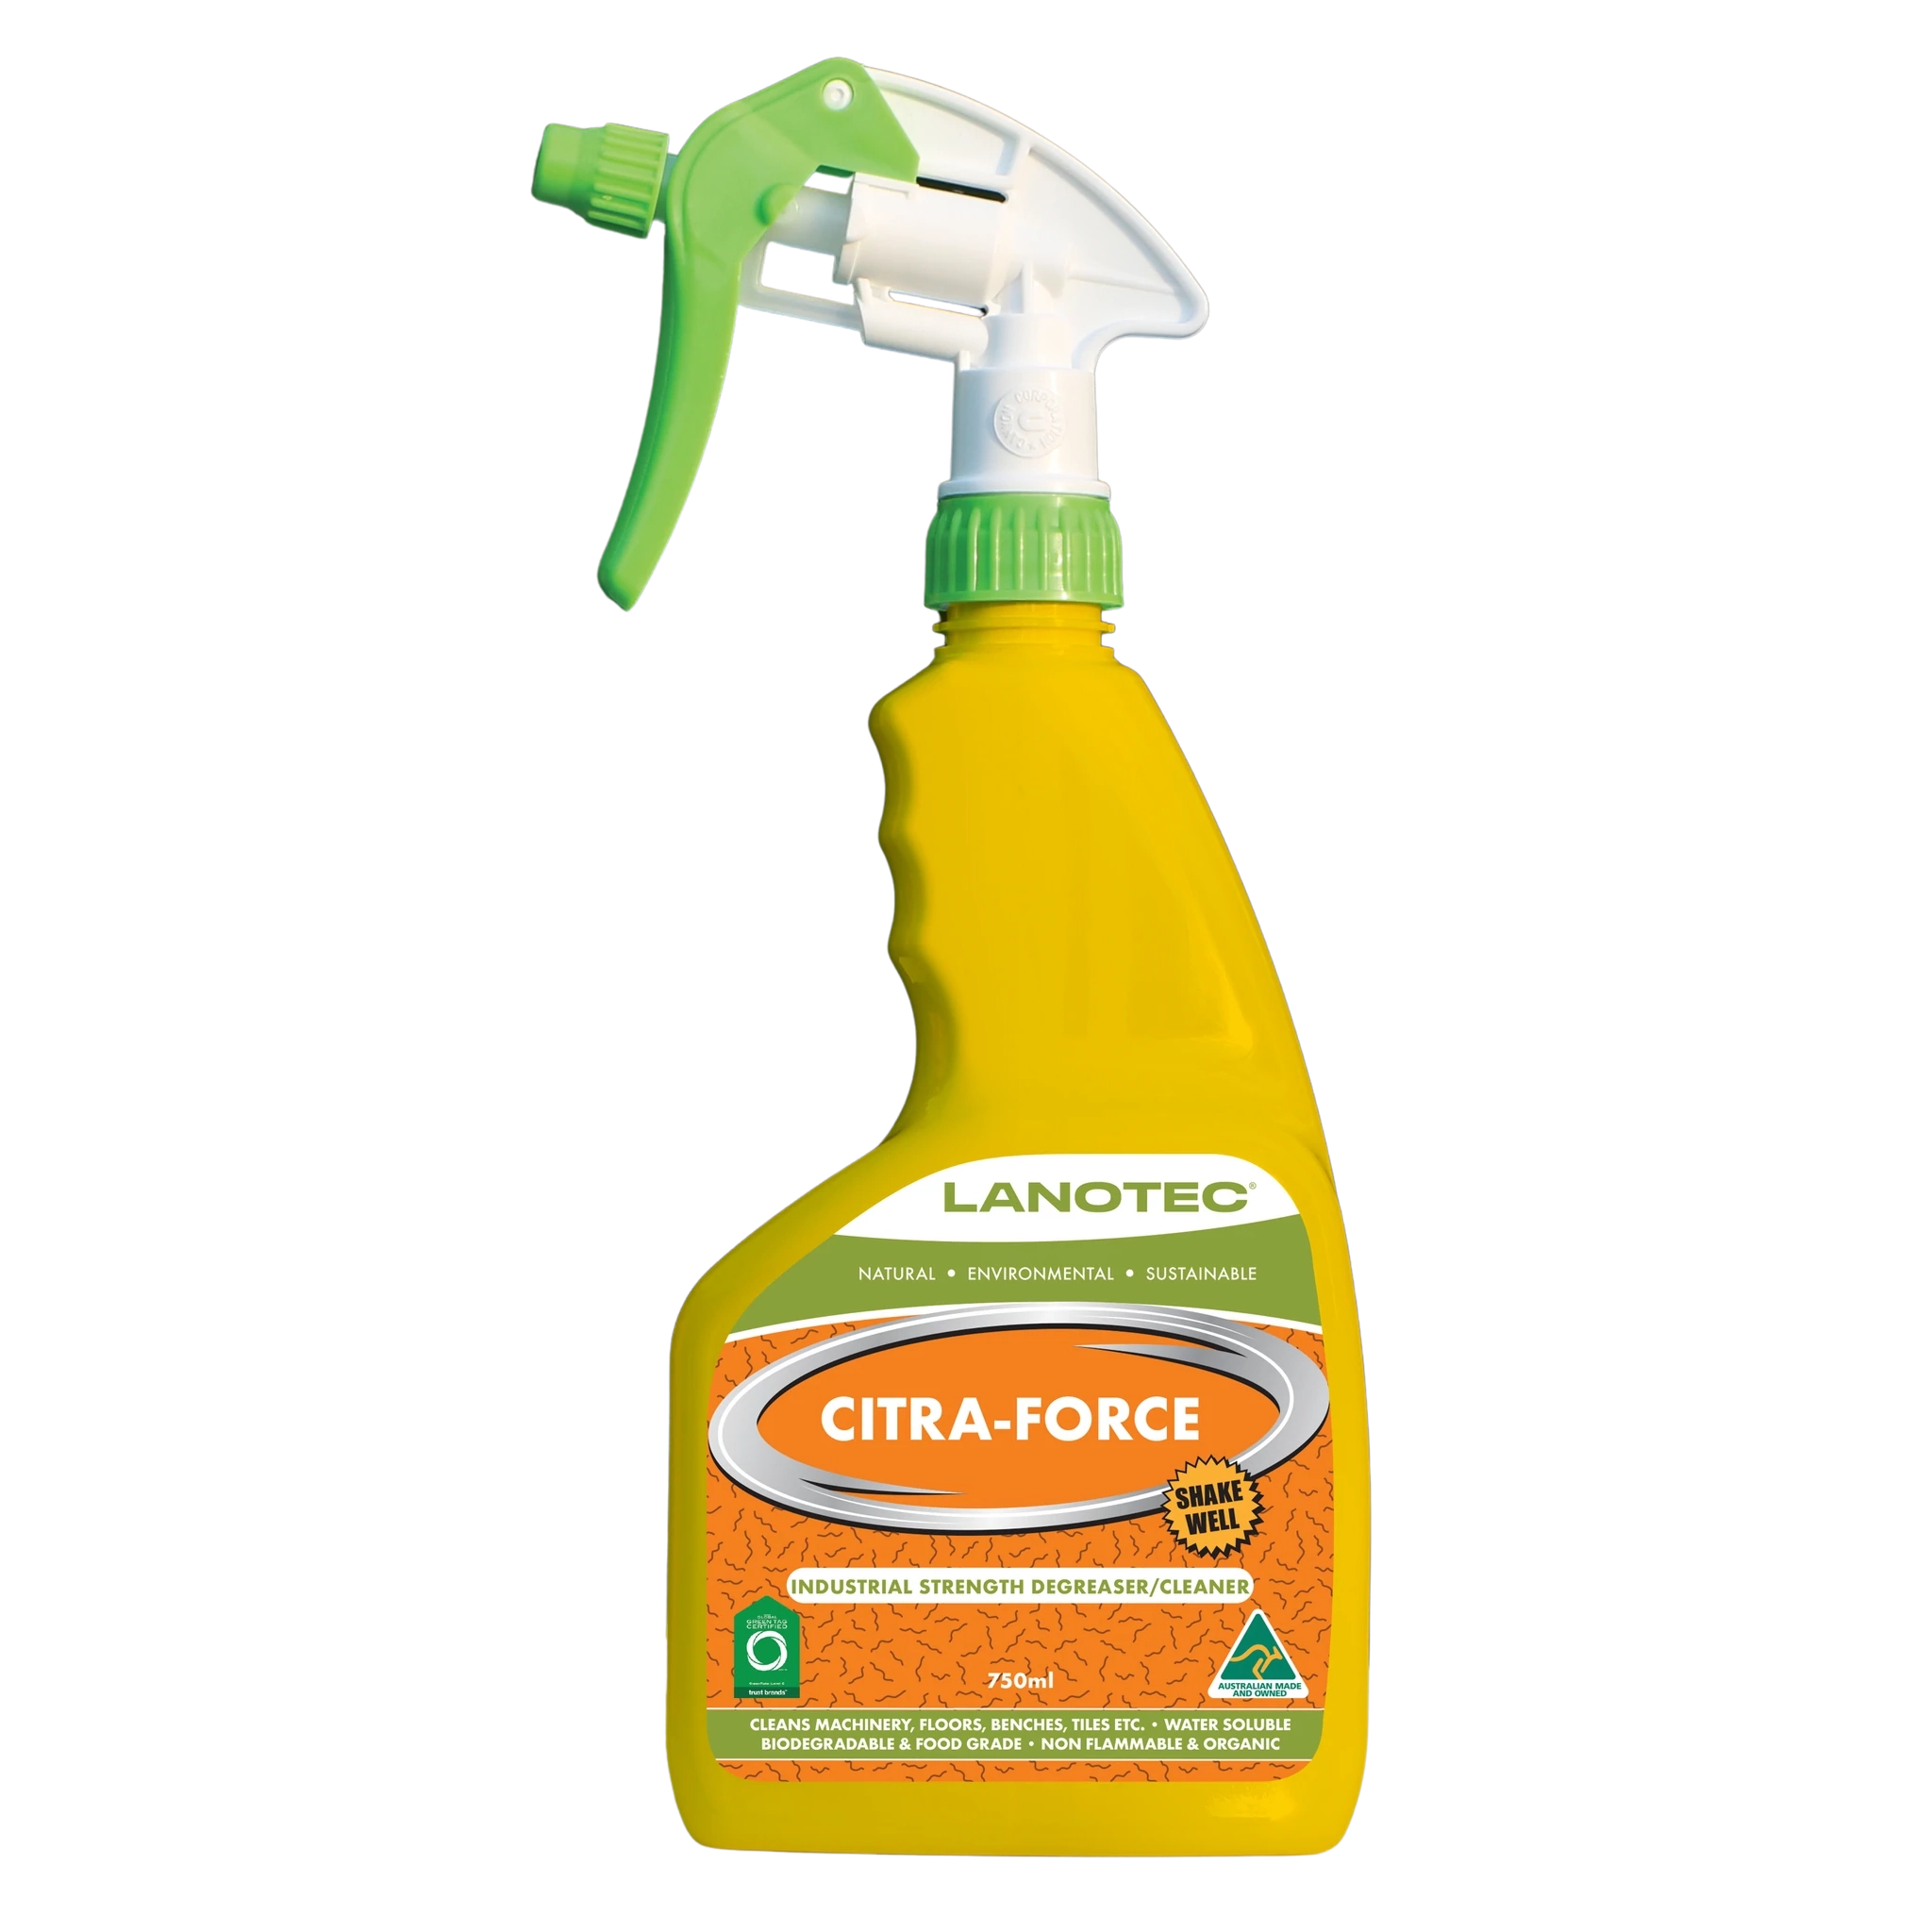 Lanotec Citra-Force - 750 ml Spray Pack | Lanotec